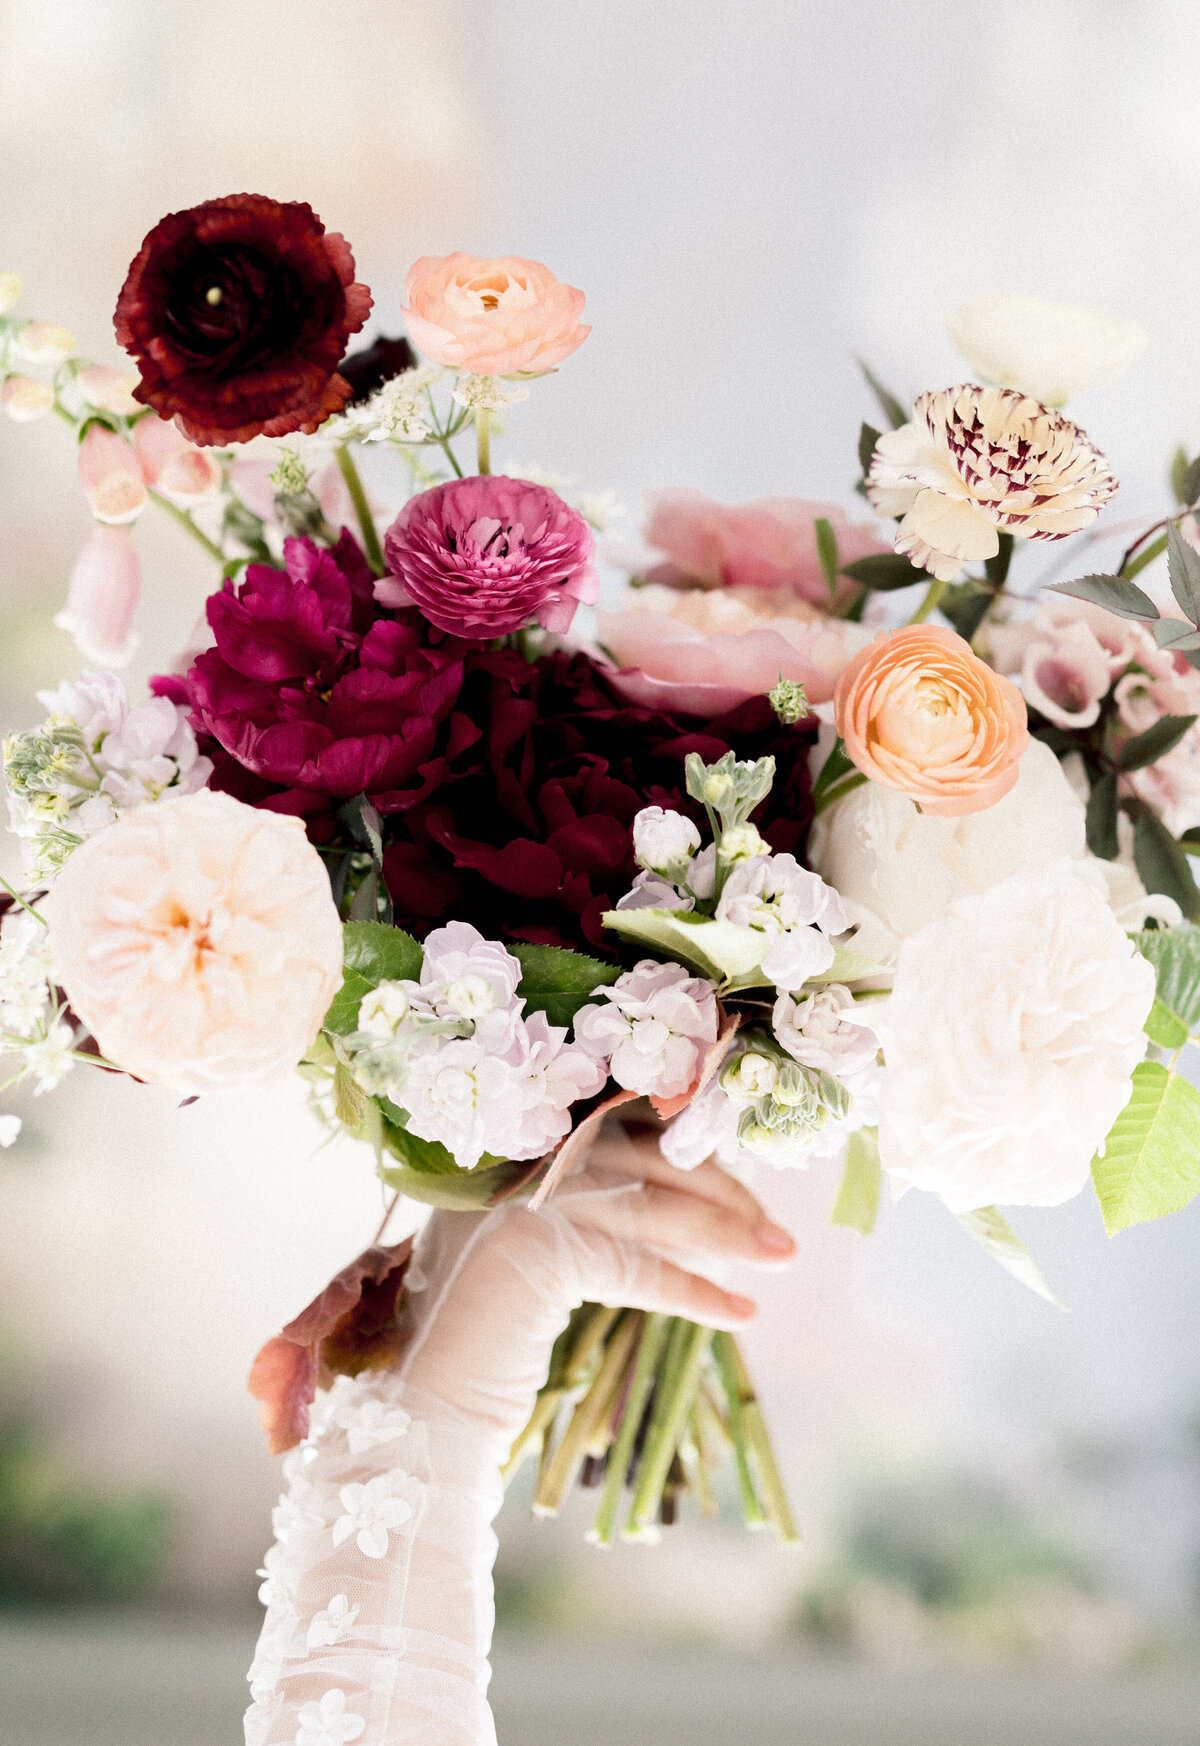 Atelier-Carmel-Montrea-Luxury-Wedding-Florist-GALLERIES-9